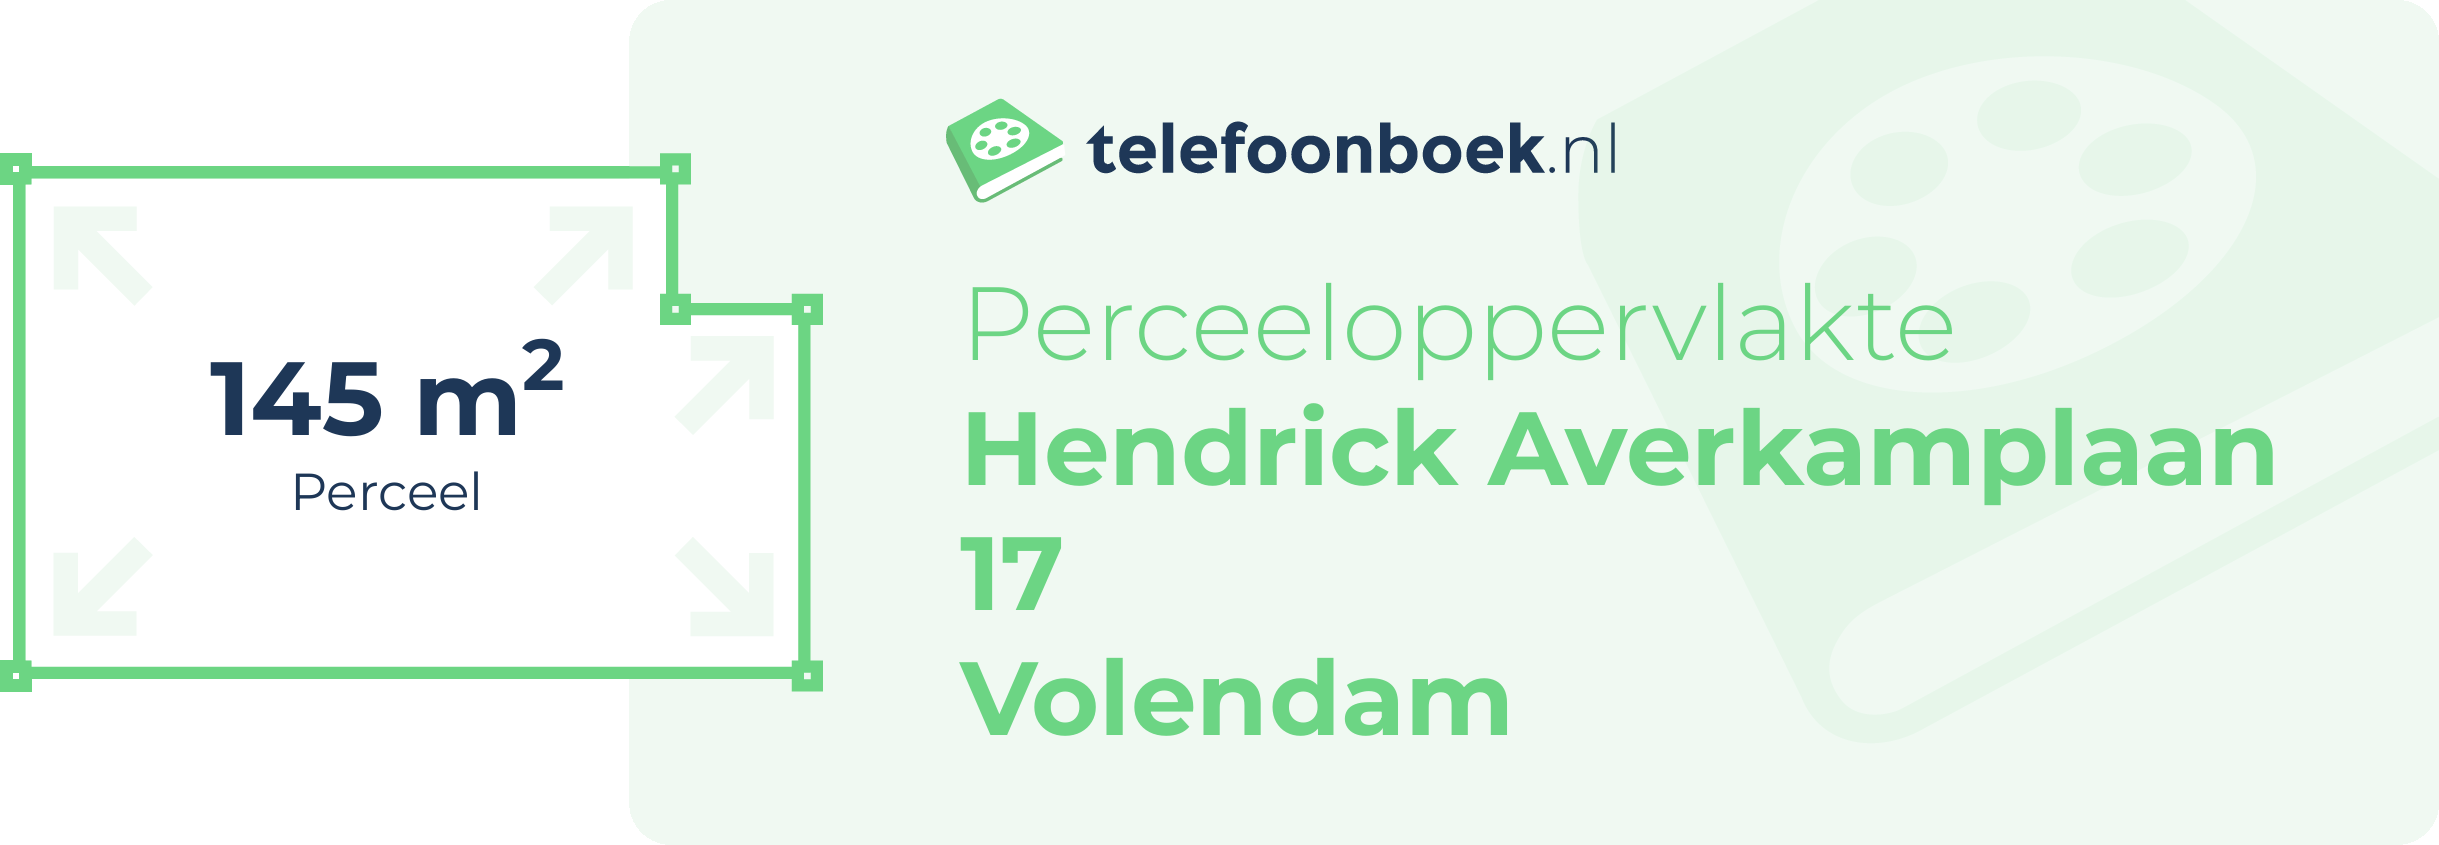 Perceeloppervlakte Hendrick Averkamplaan 17 Volendam